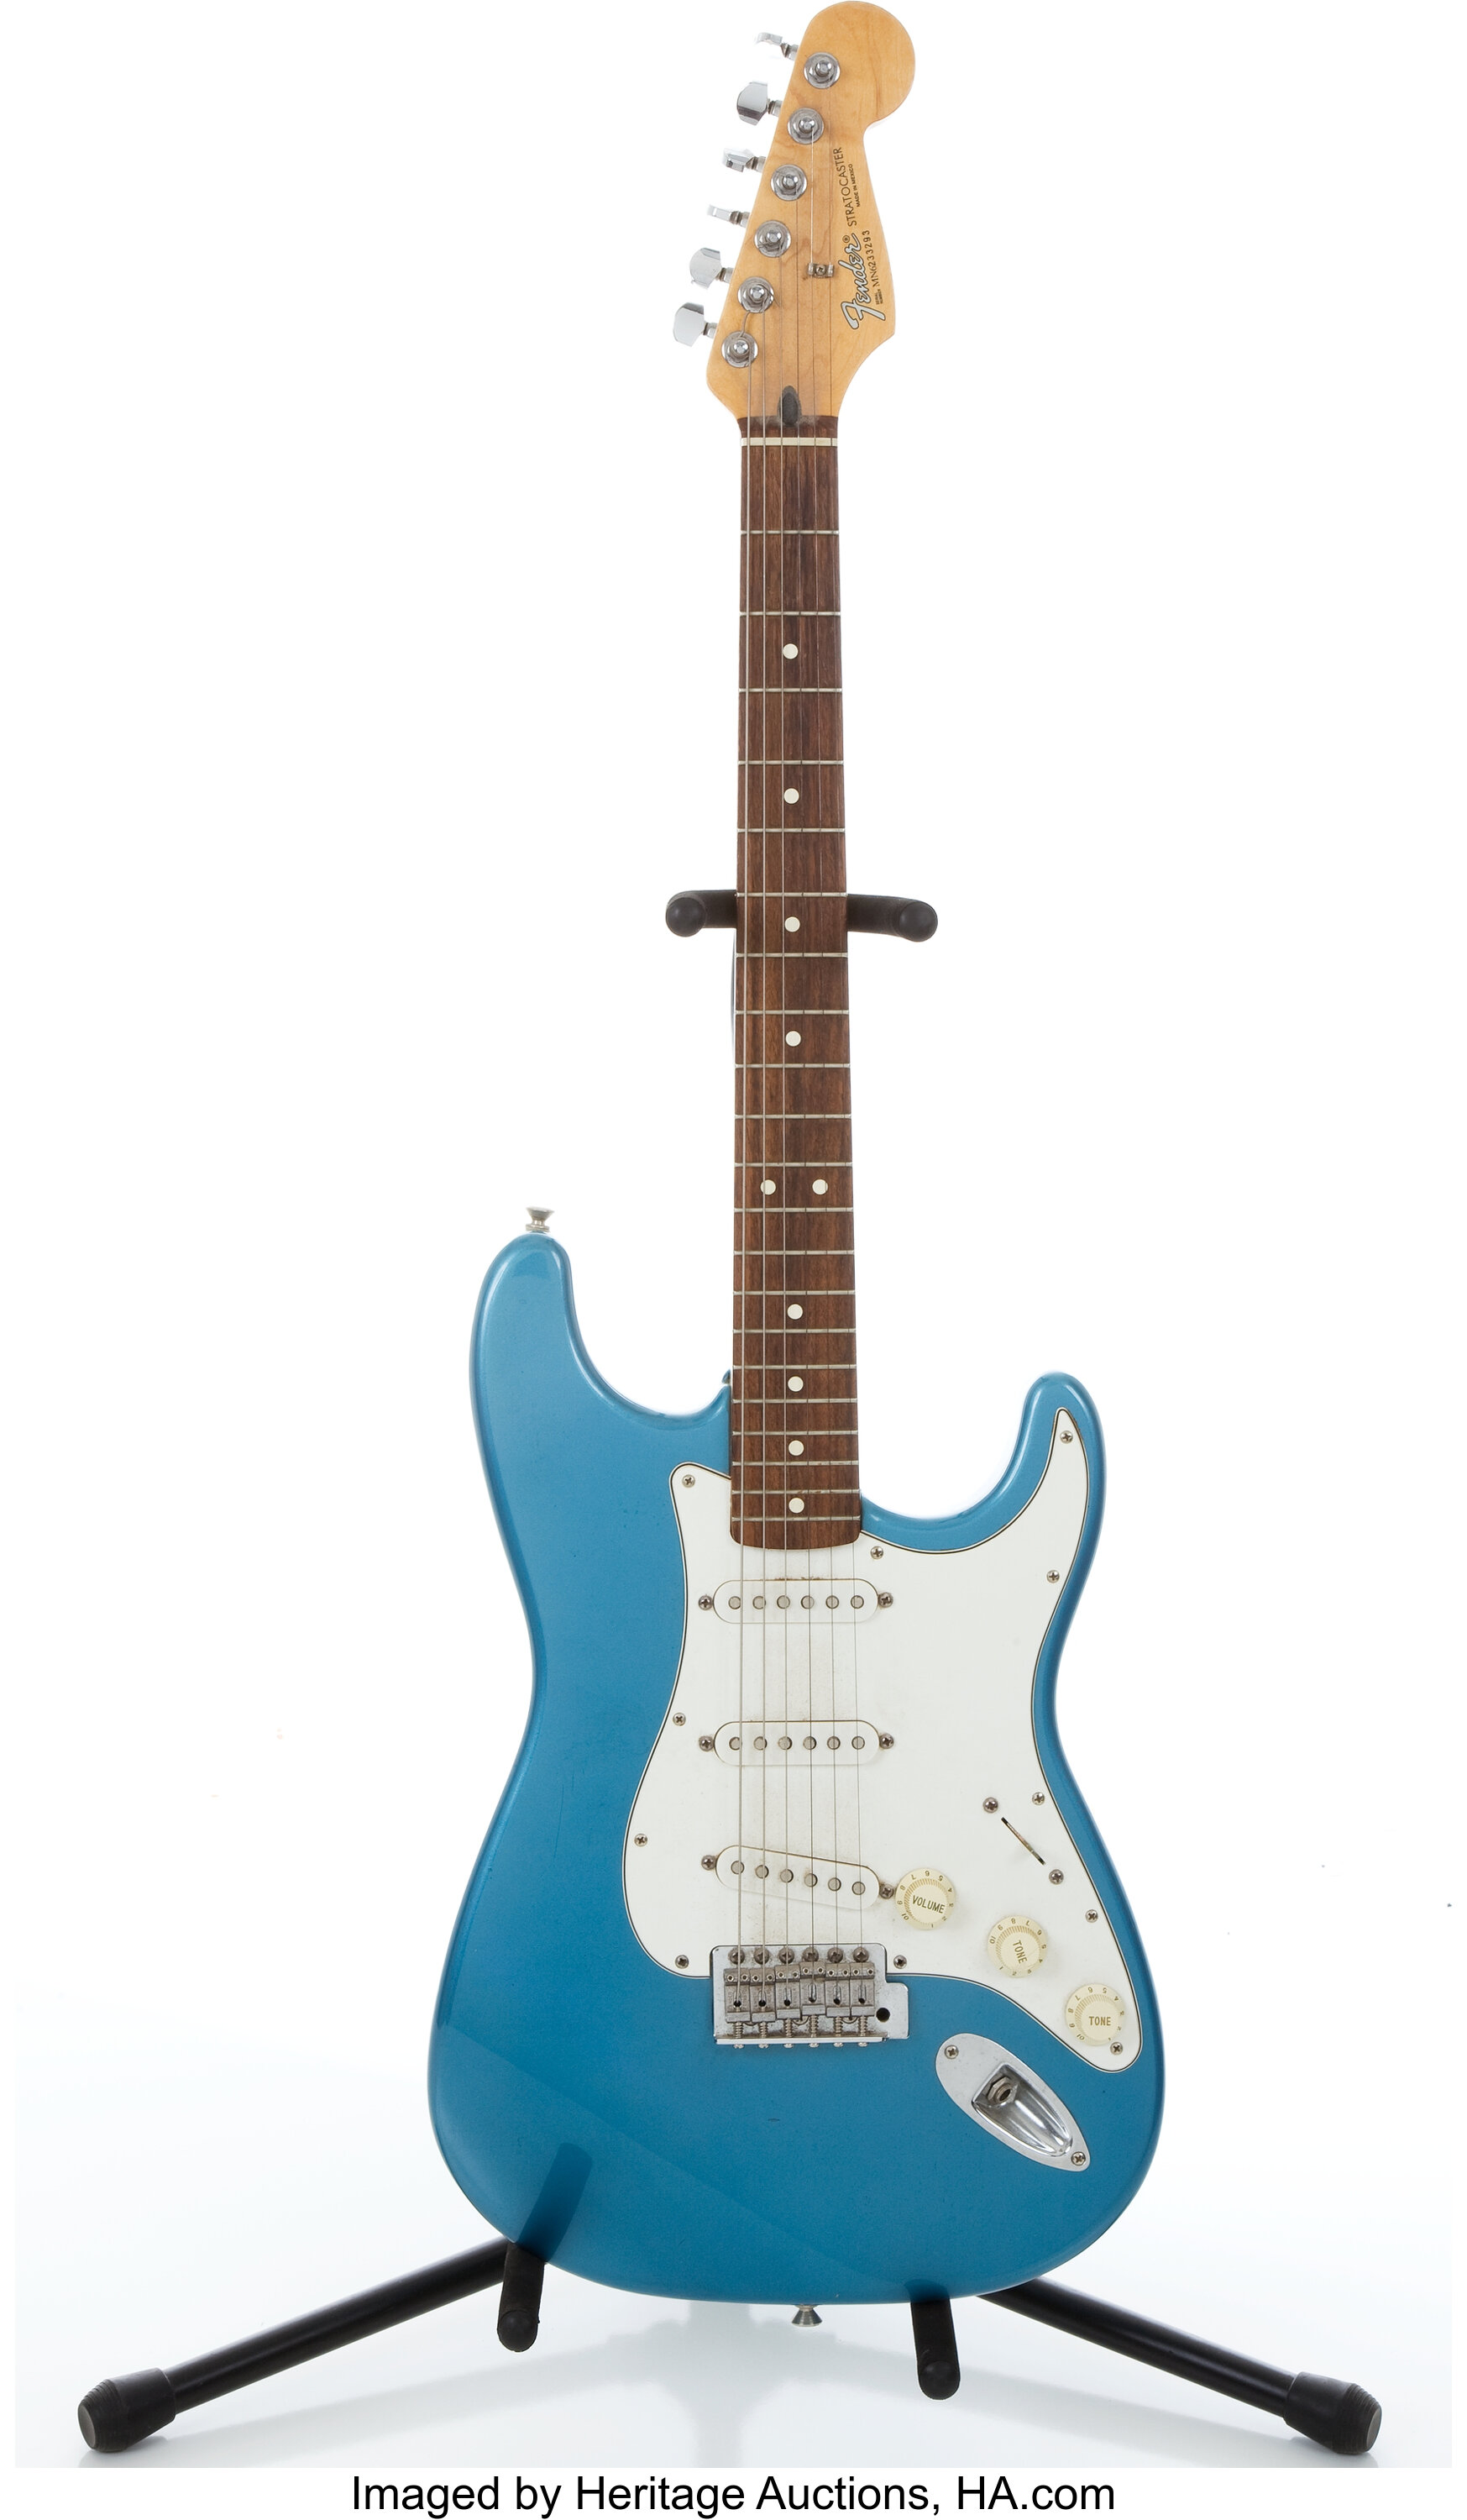 1996/97 Fender Stratocaster Blue Metallic Electric Guitar | Lot